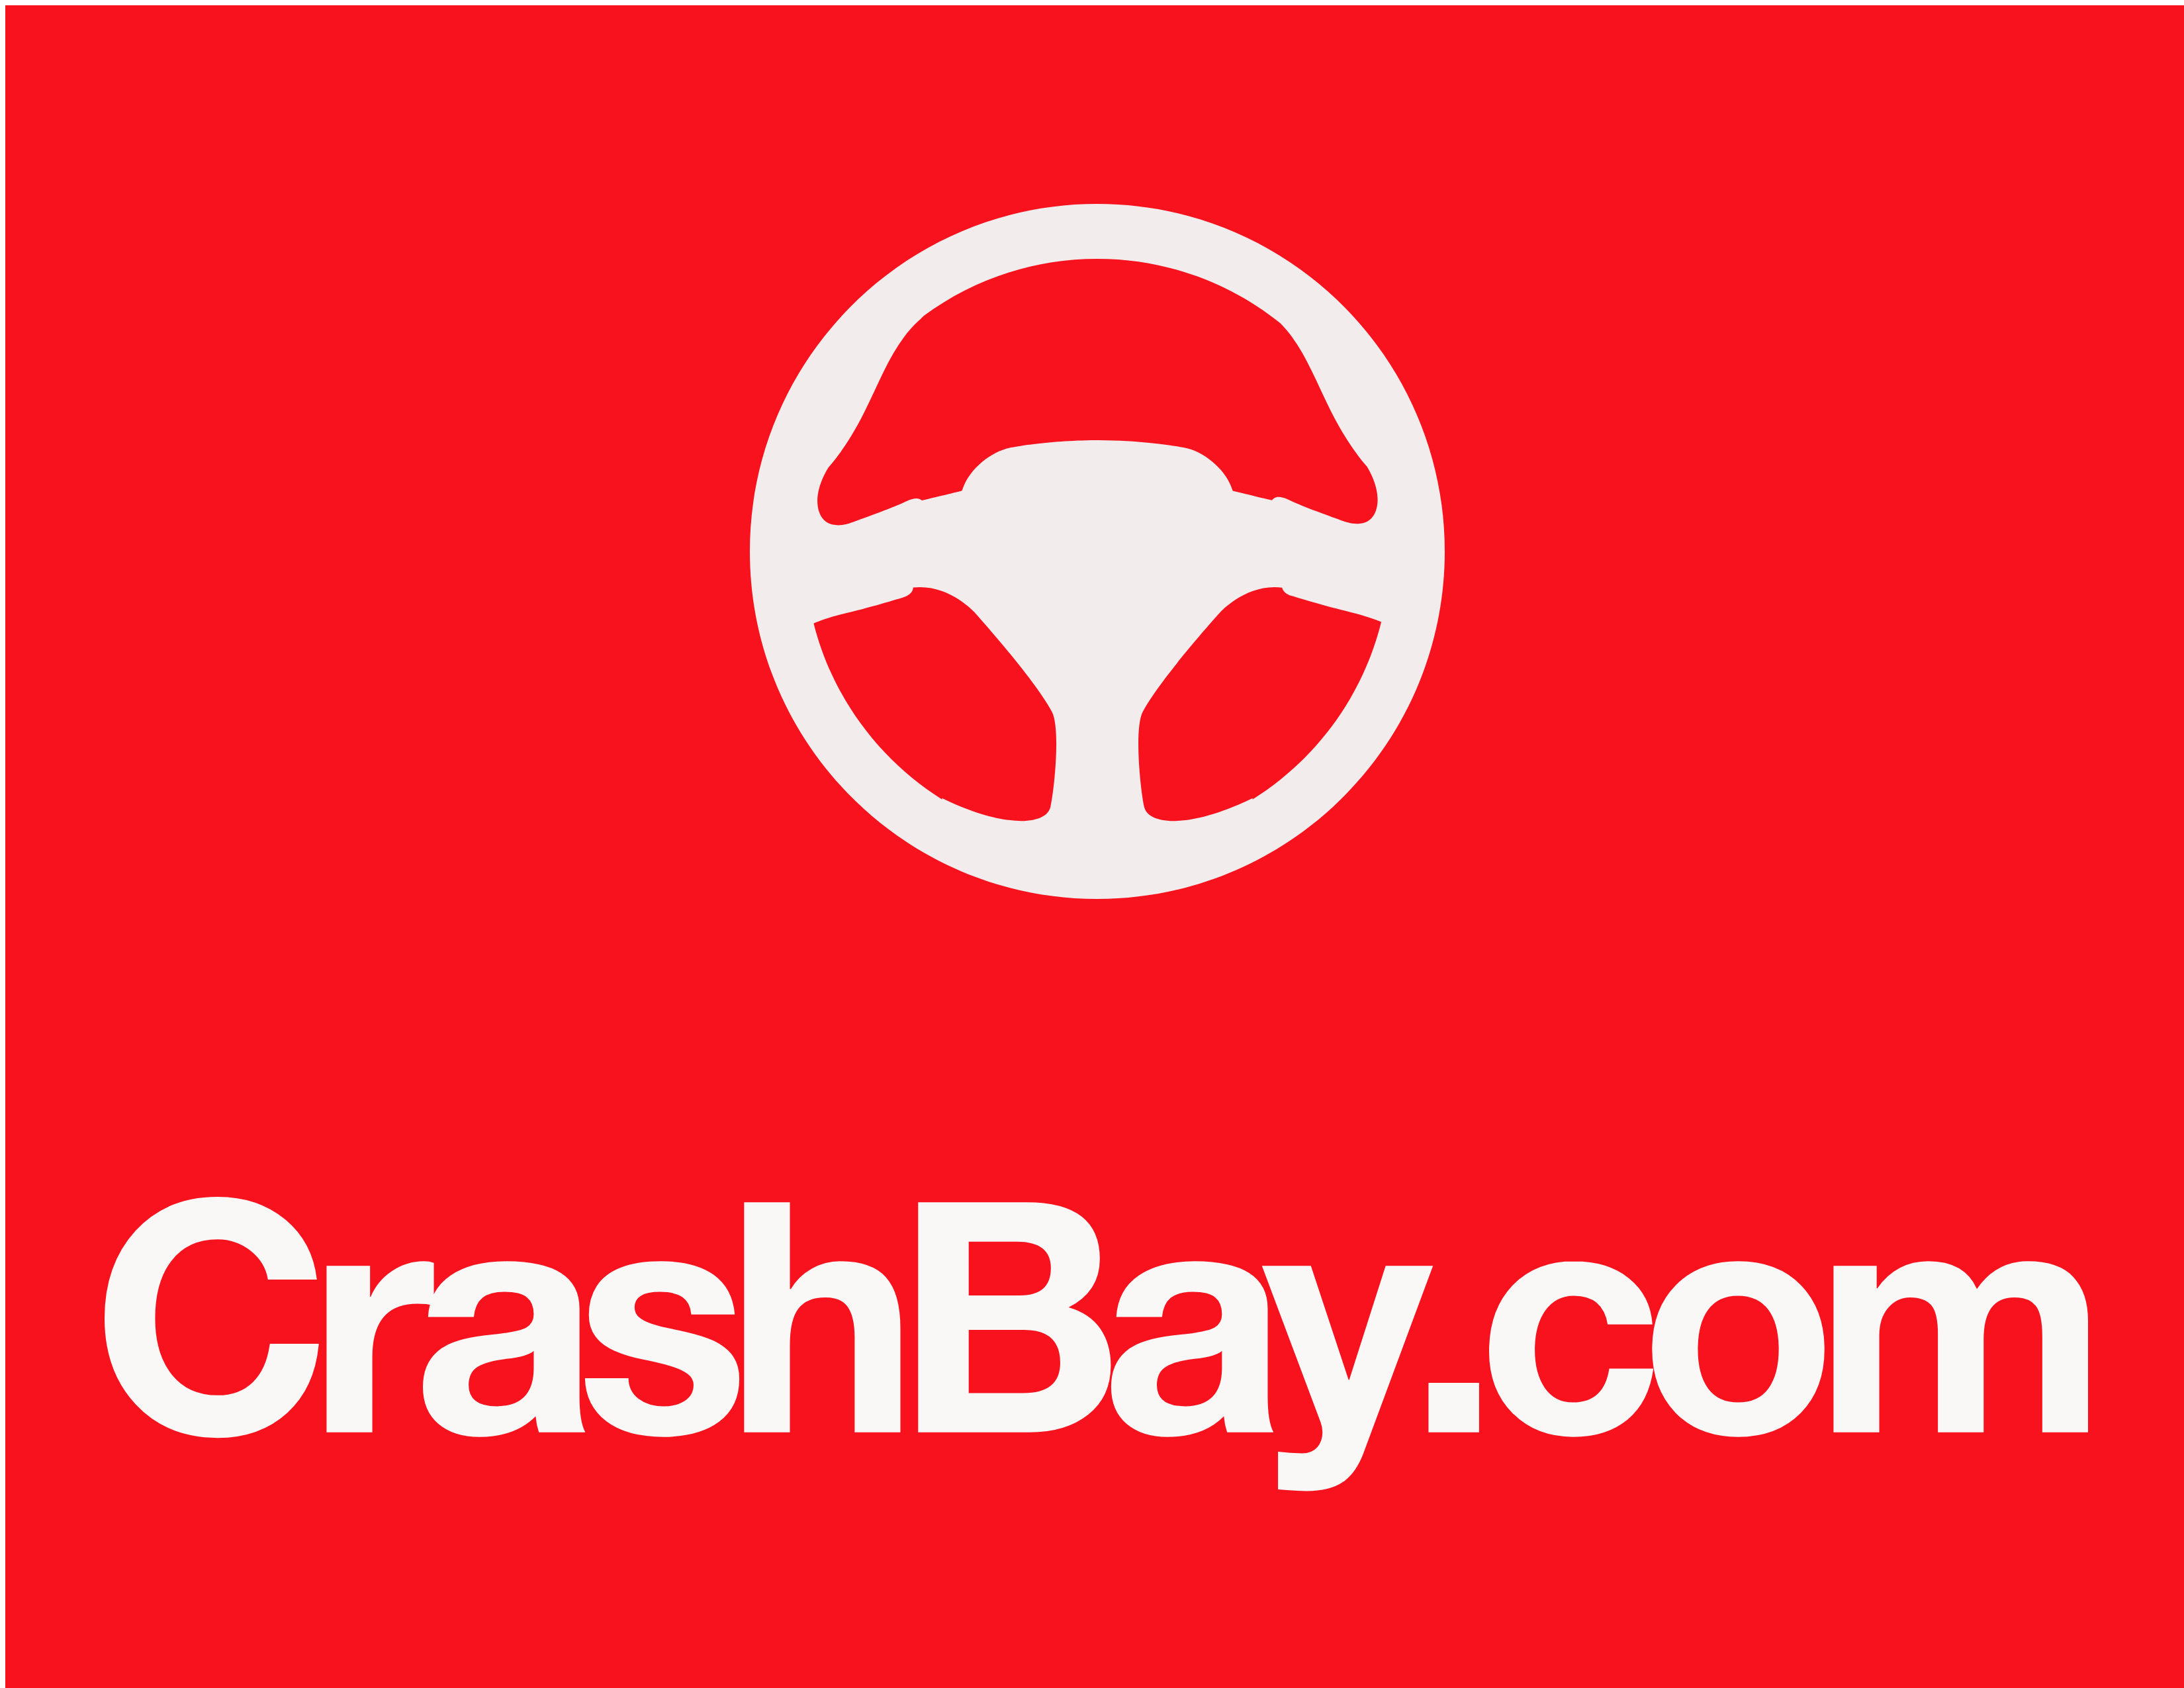 CrashBay.com